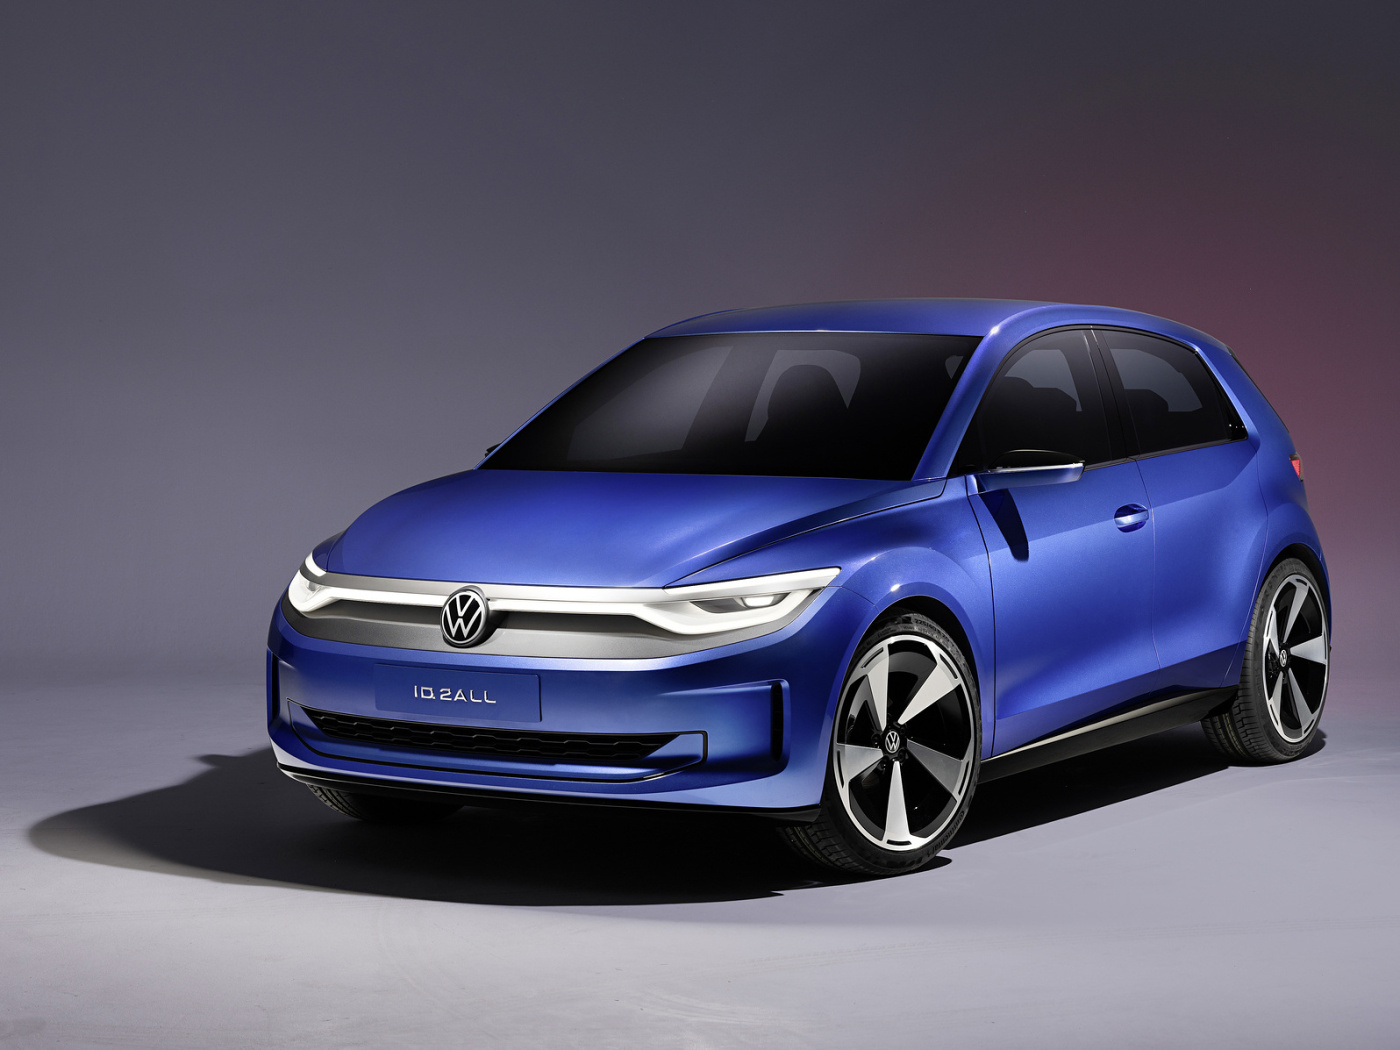 Elektromobil pro každého? Volkswagen představil model ID. 2all s cenovkou 25.000 Eur